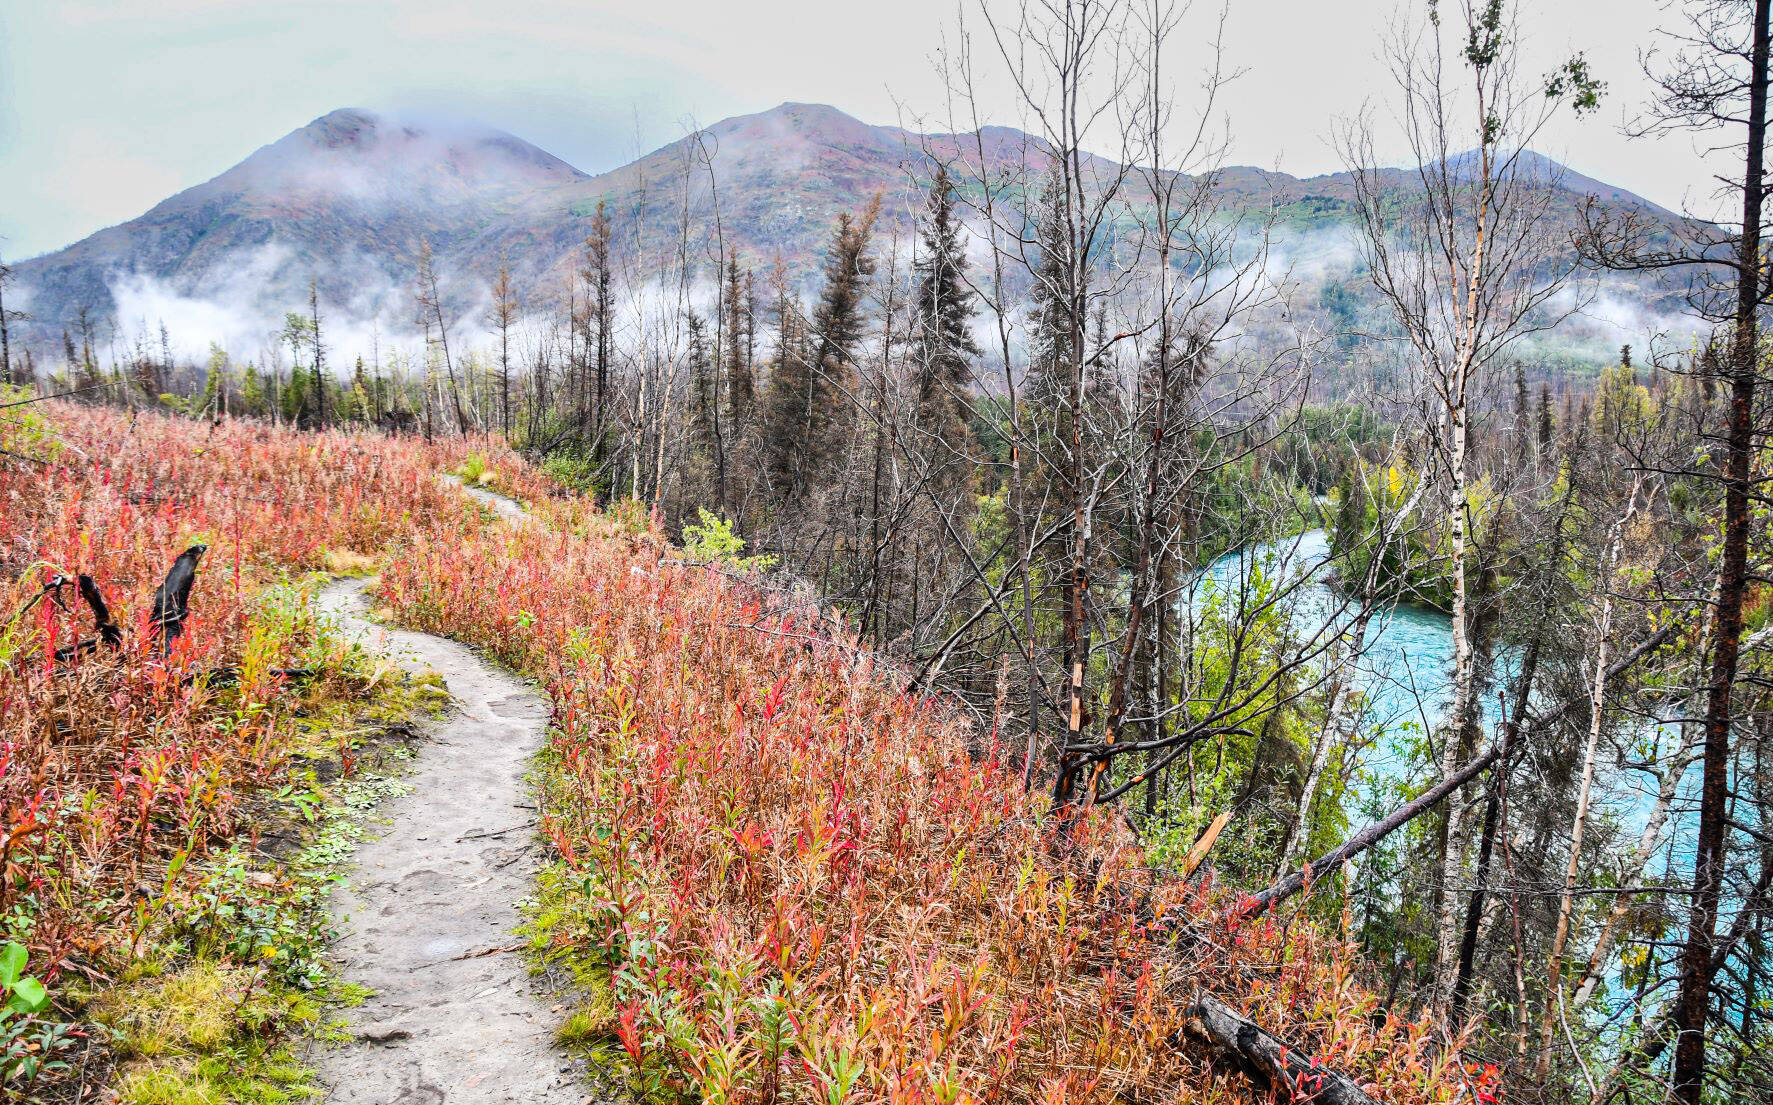 Autumn foliage reveals the change of seasons on the Upper Kenai River Trail. (Photo by USFWS)